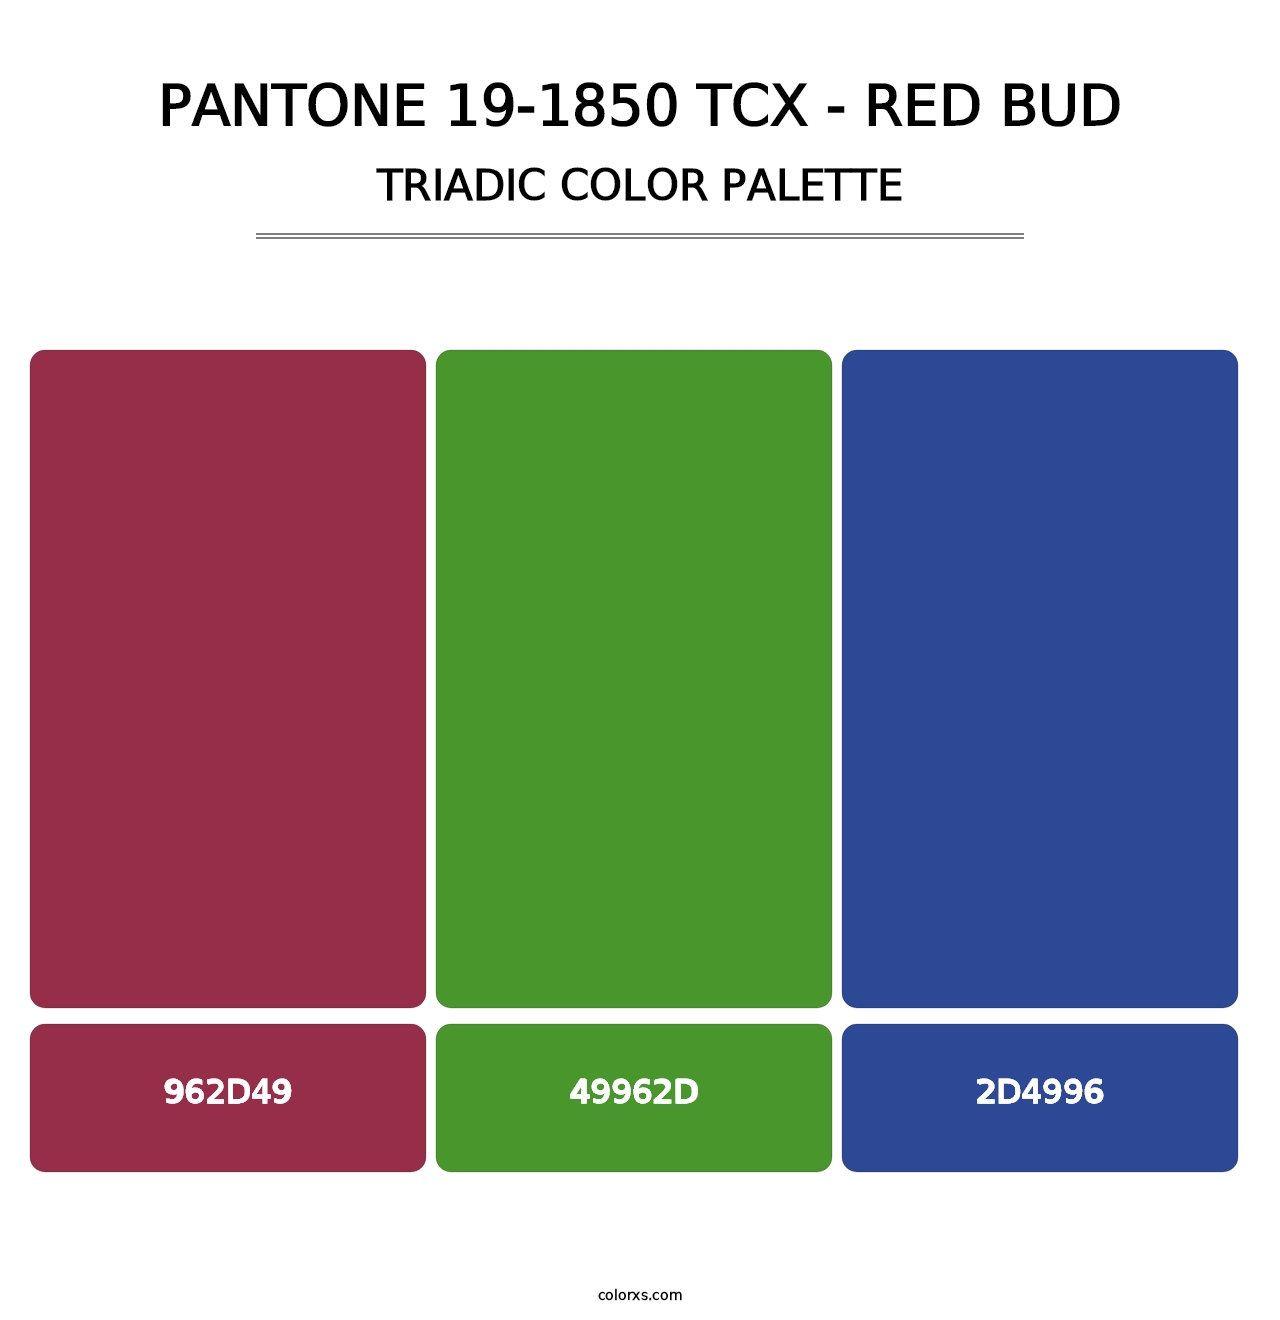 PANTONE 19-1850 TCX - Red Bud - Triadic Color Palette